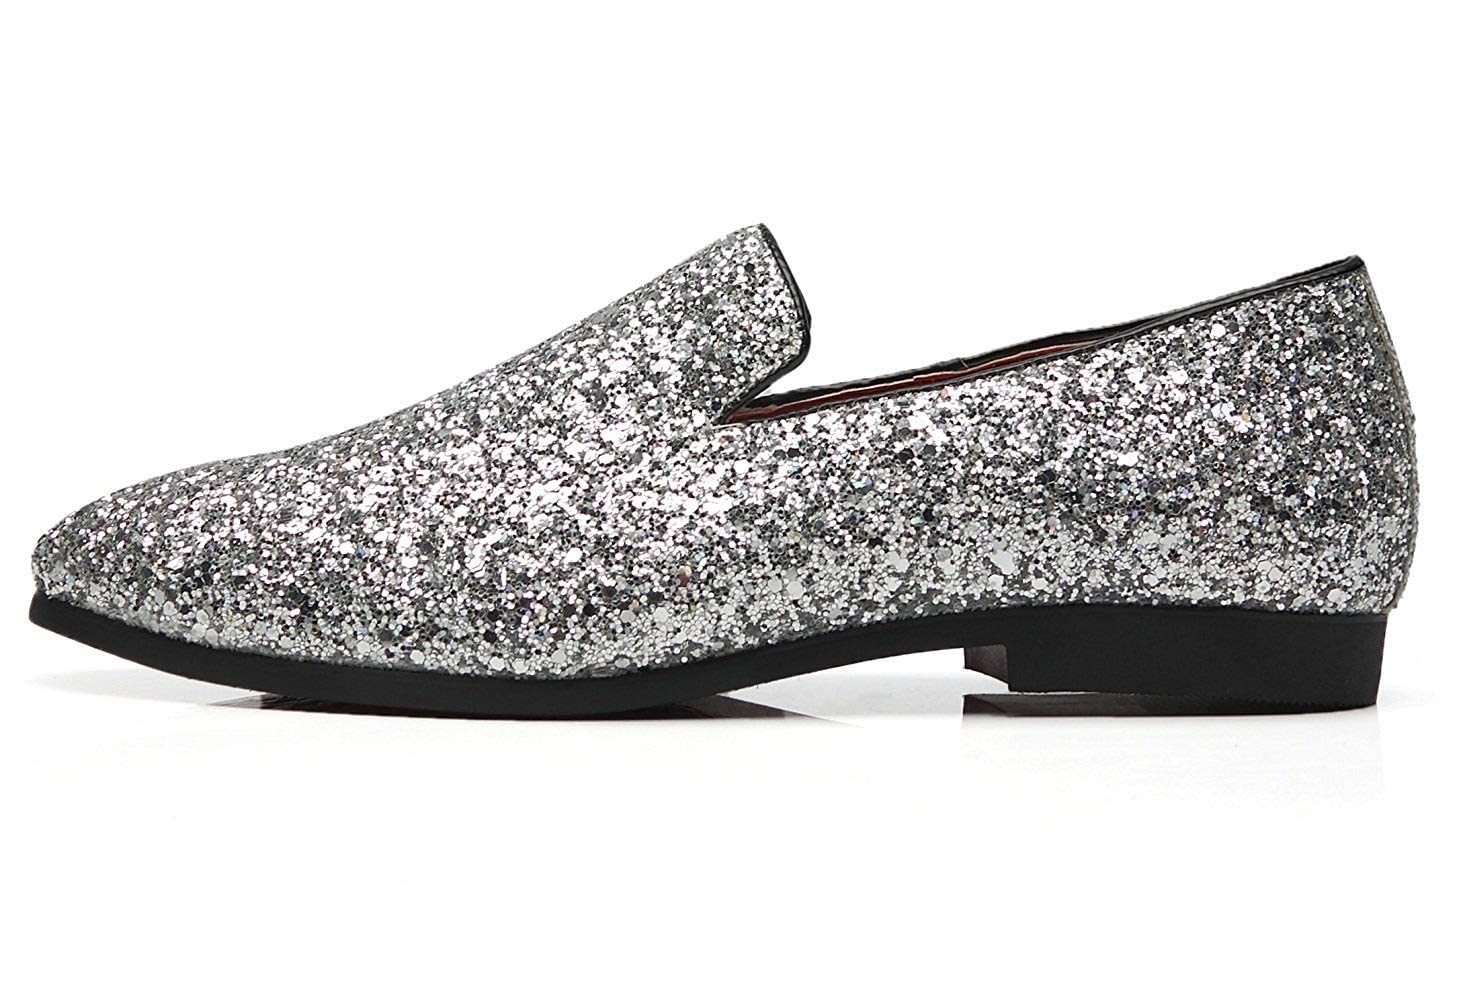 Mens Smoking Slipper Metallic Sparkling Glitter Tuxedo Slip on Dress Shoes Loafers Shoes (12.0 D(M) US, Silver)